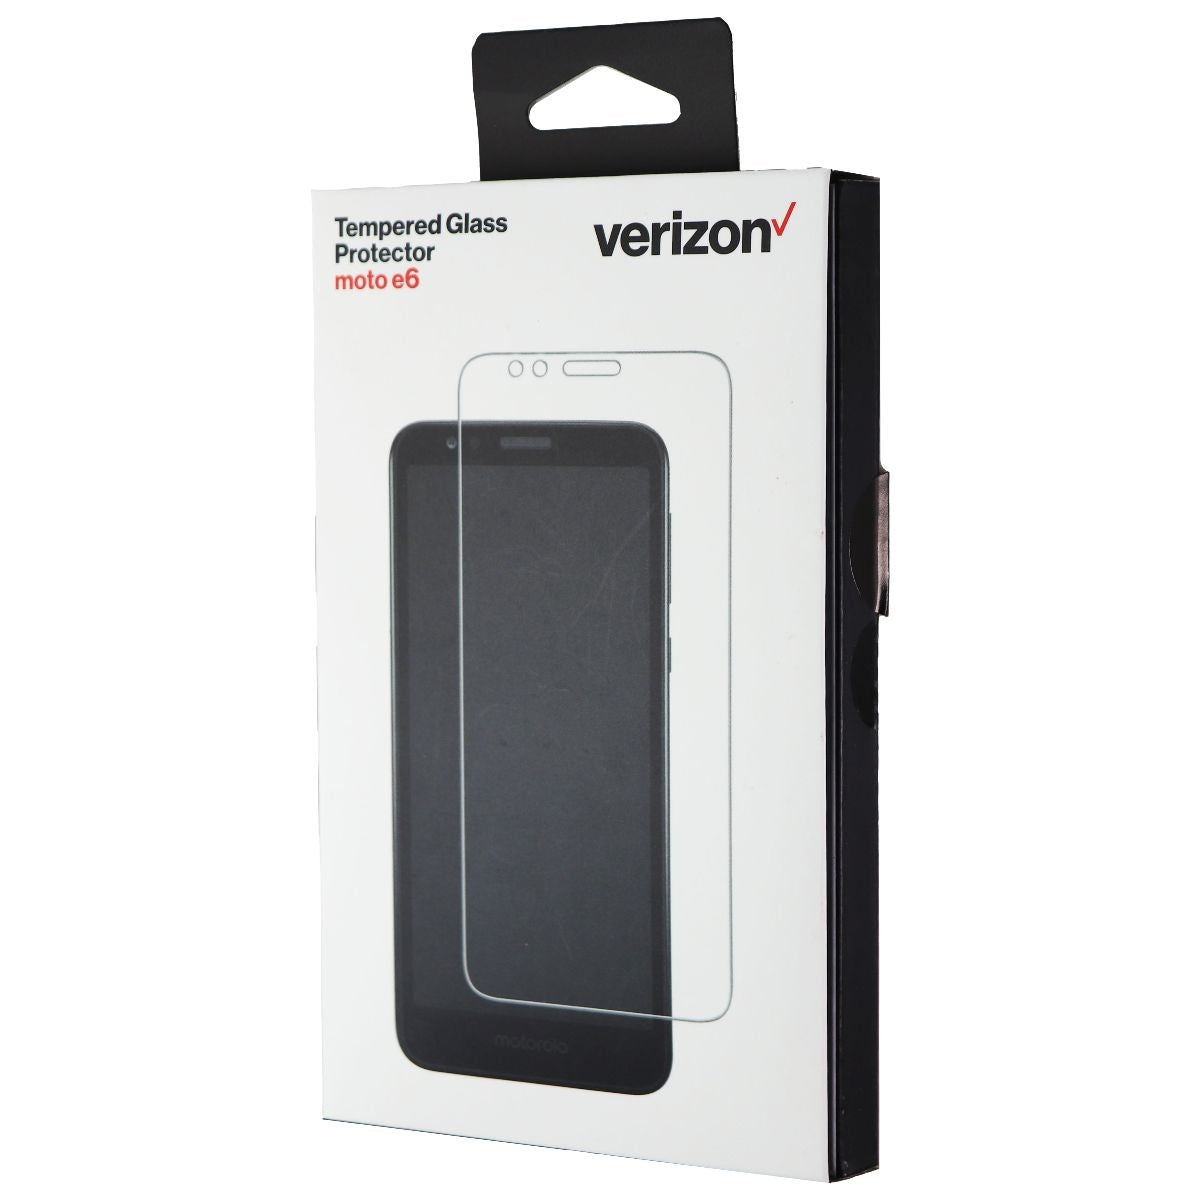 Verizon Tempered Glass Screen Display Protector for Motorola Moto e6 - Clear Cell Phone - Screen Protectors Verizon    - Simple Cell Bulk Wholesale Pricing - USA Seller